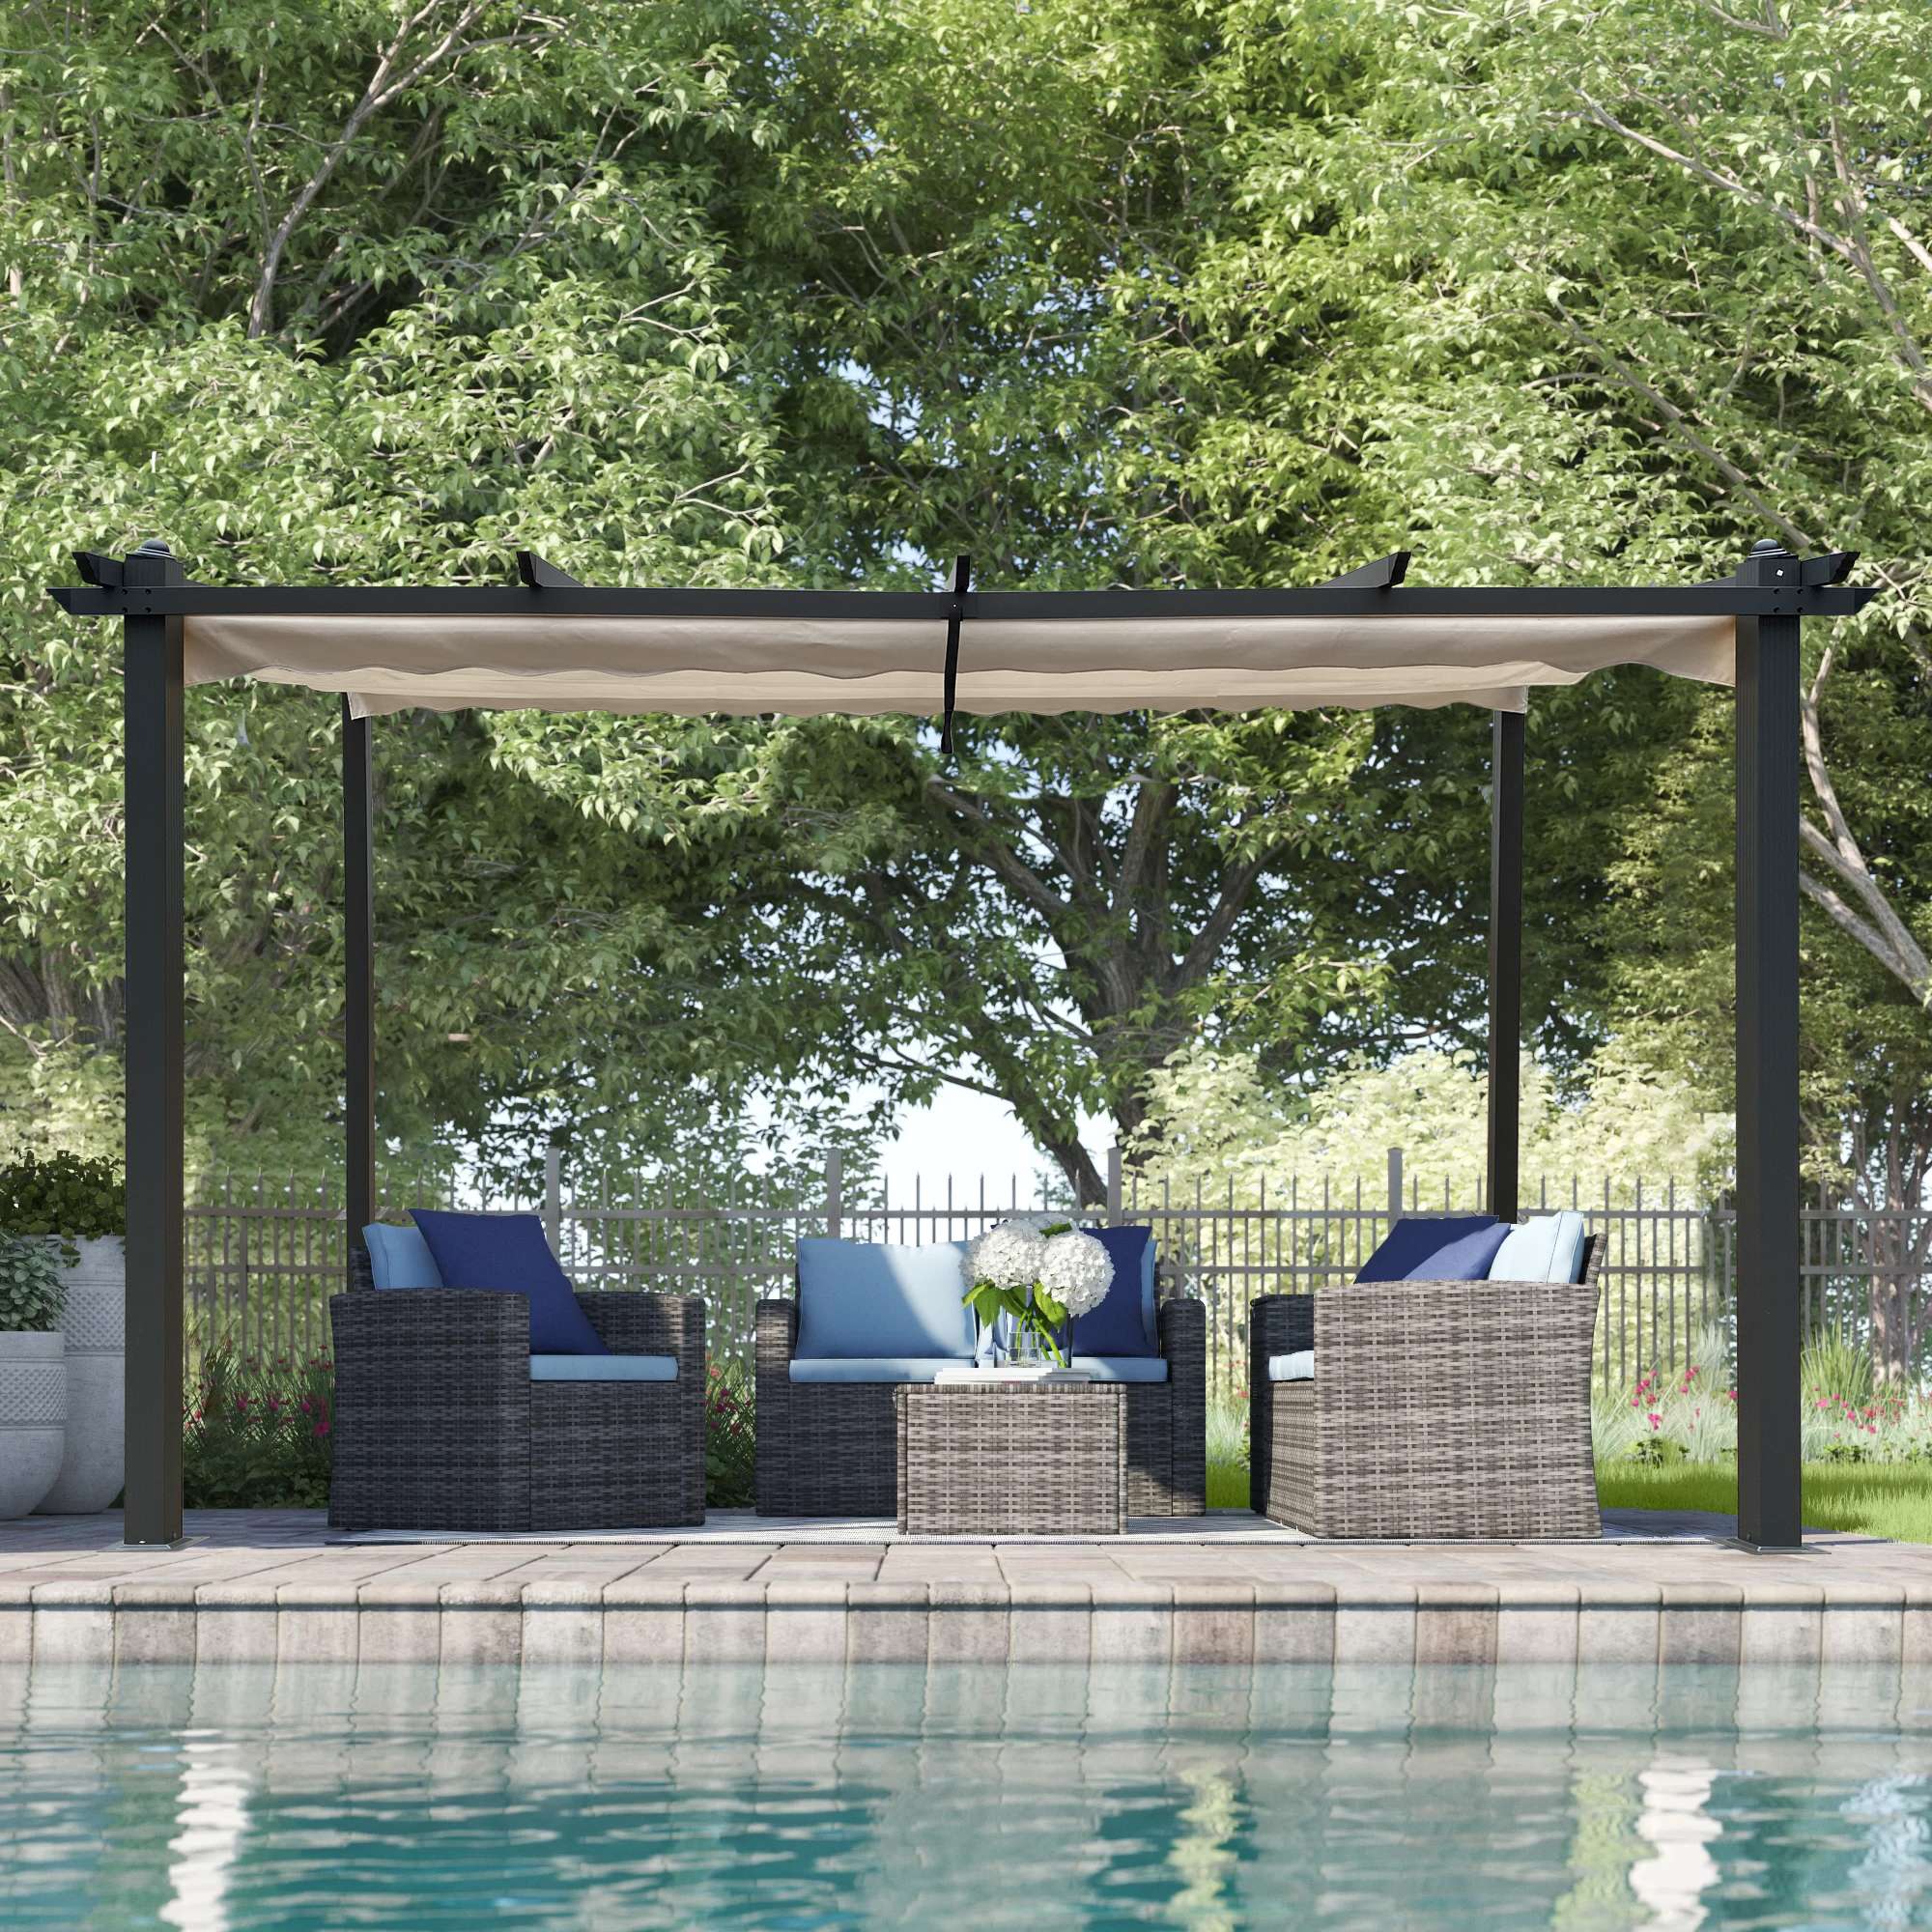 [KGORGE Plus]13 x 10 Ft Outdoor Patio Retractable Pergola With Canopy Sun shelter Pergola for Gardens,Terraces,Backyard